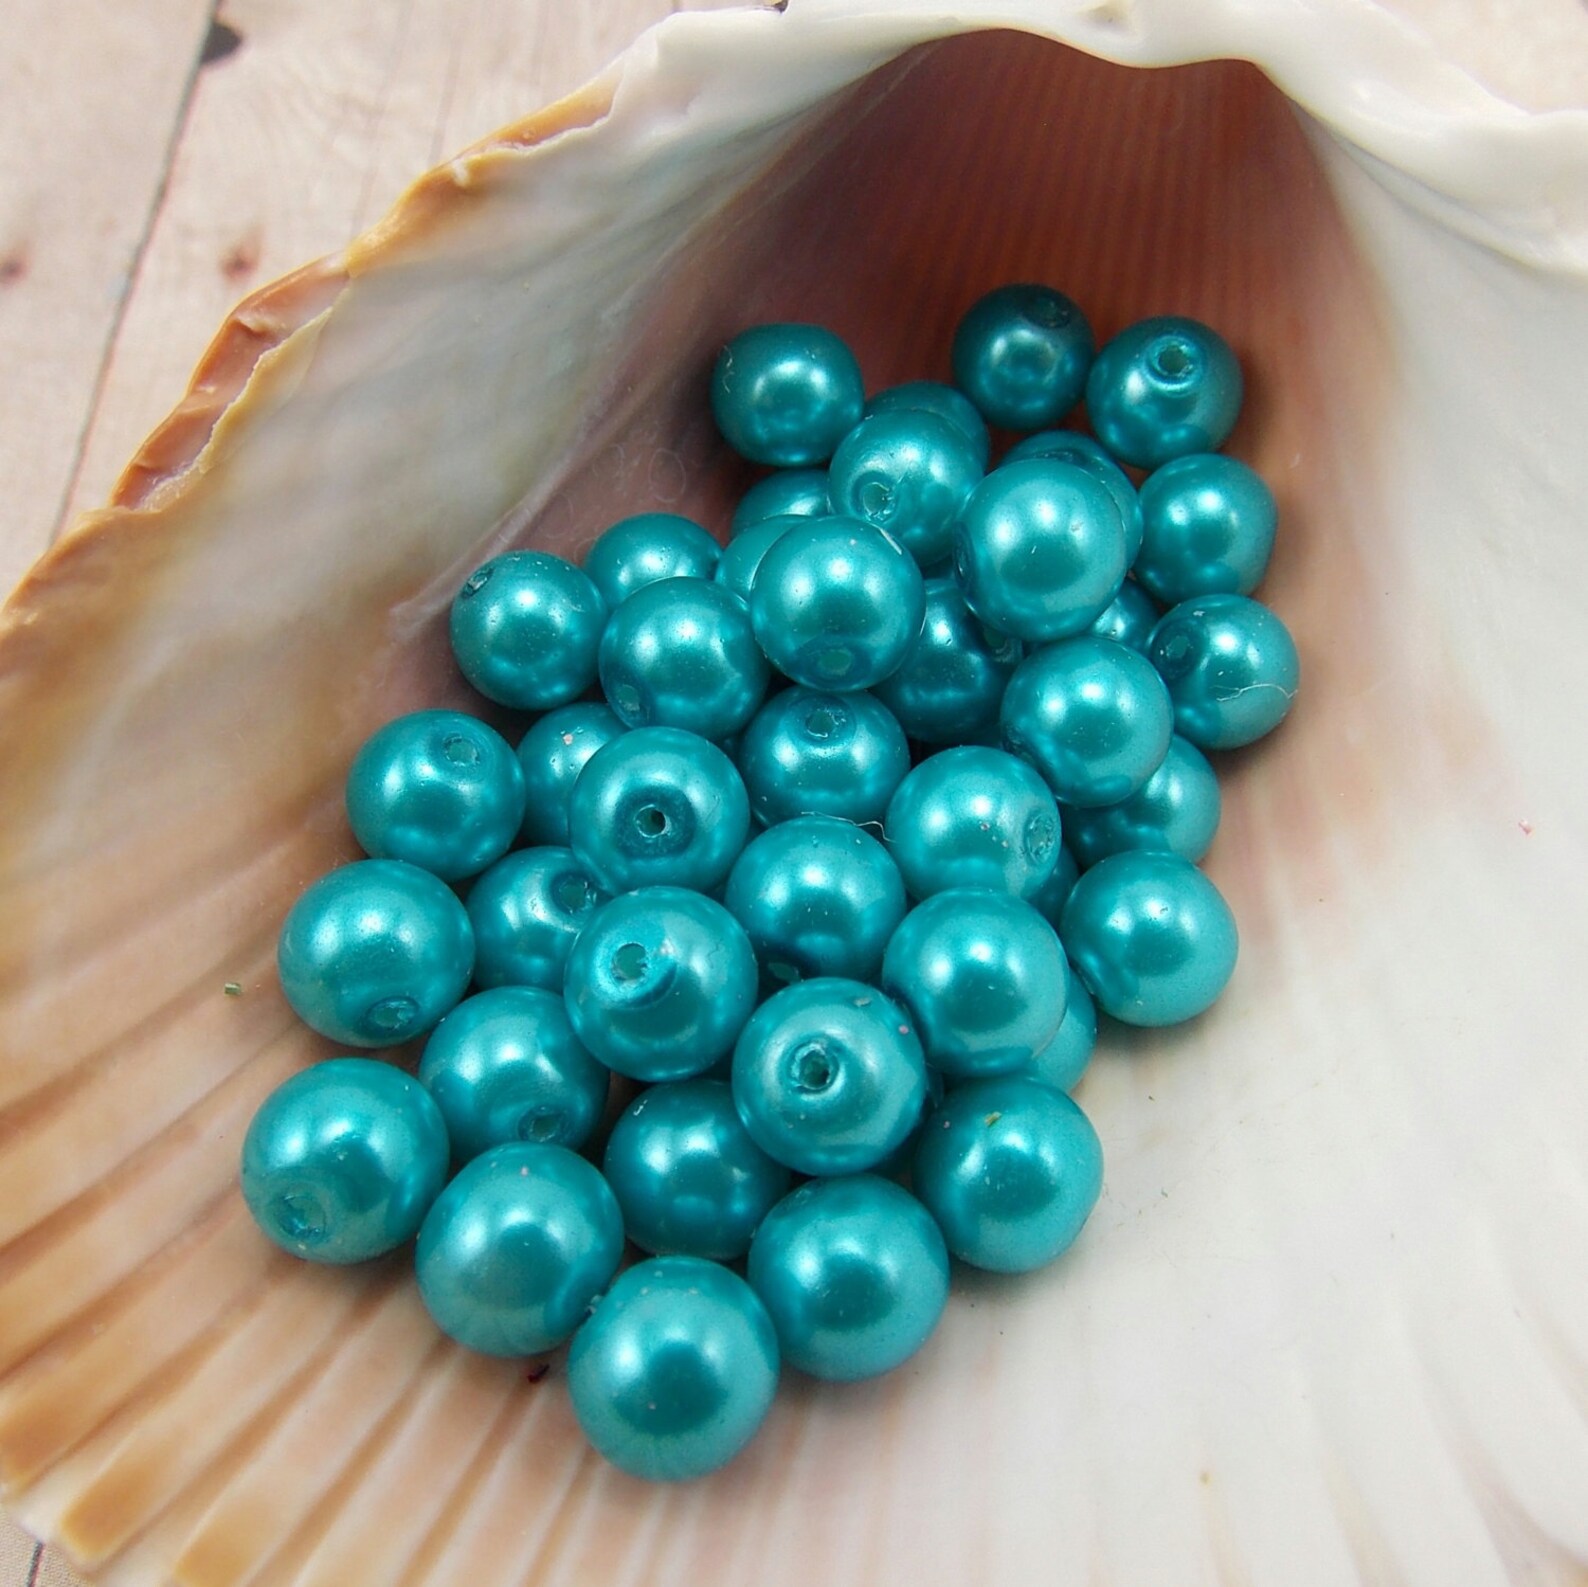 10mm Glass Pearls Bright Aqua Blue 40 Pieces Malibu Etsy Singapore